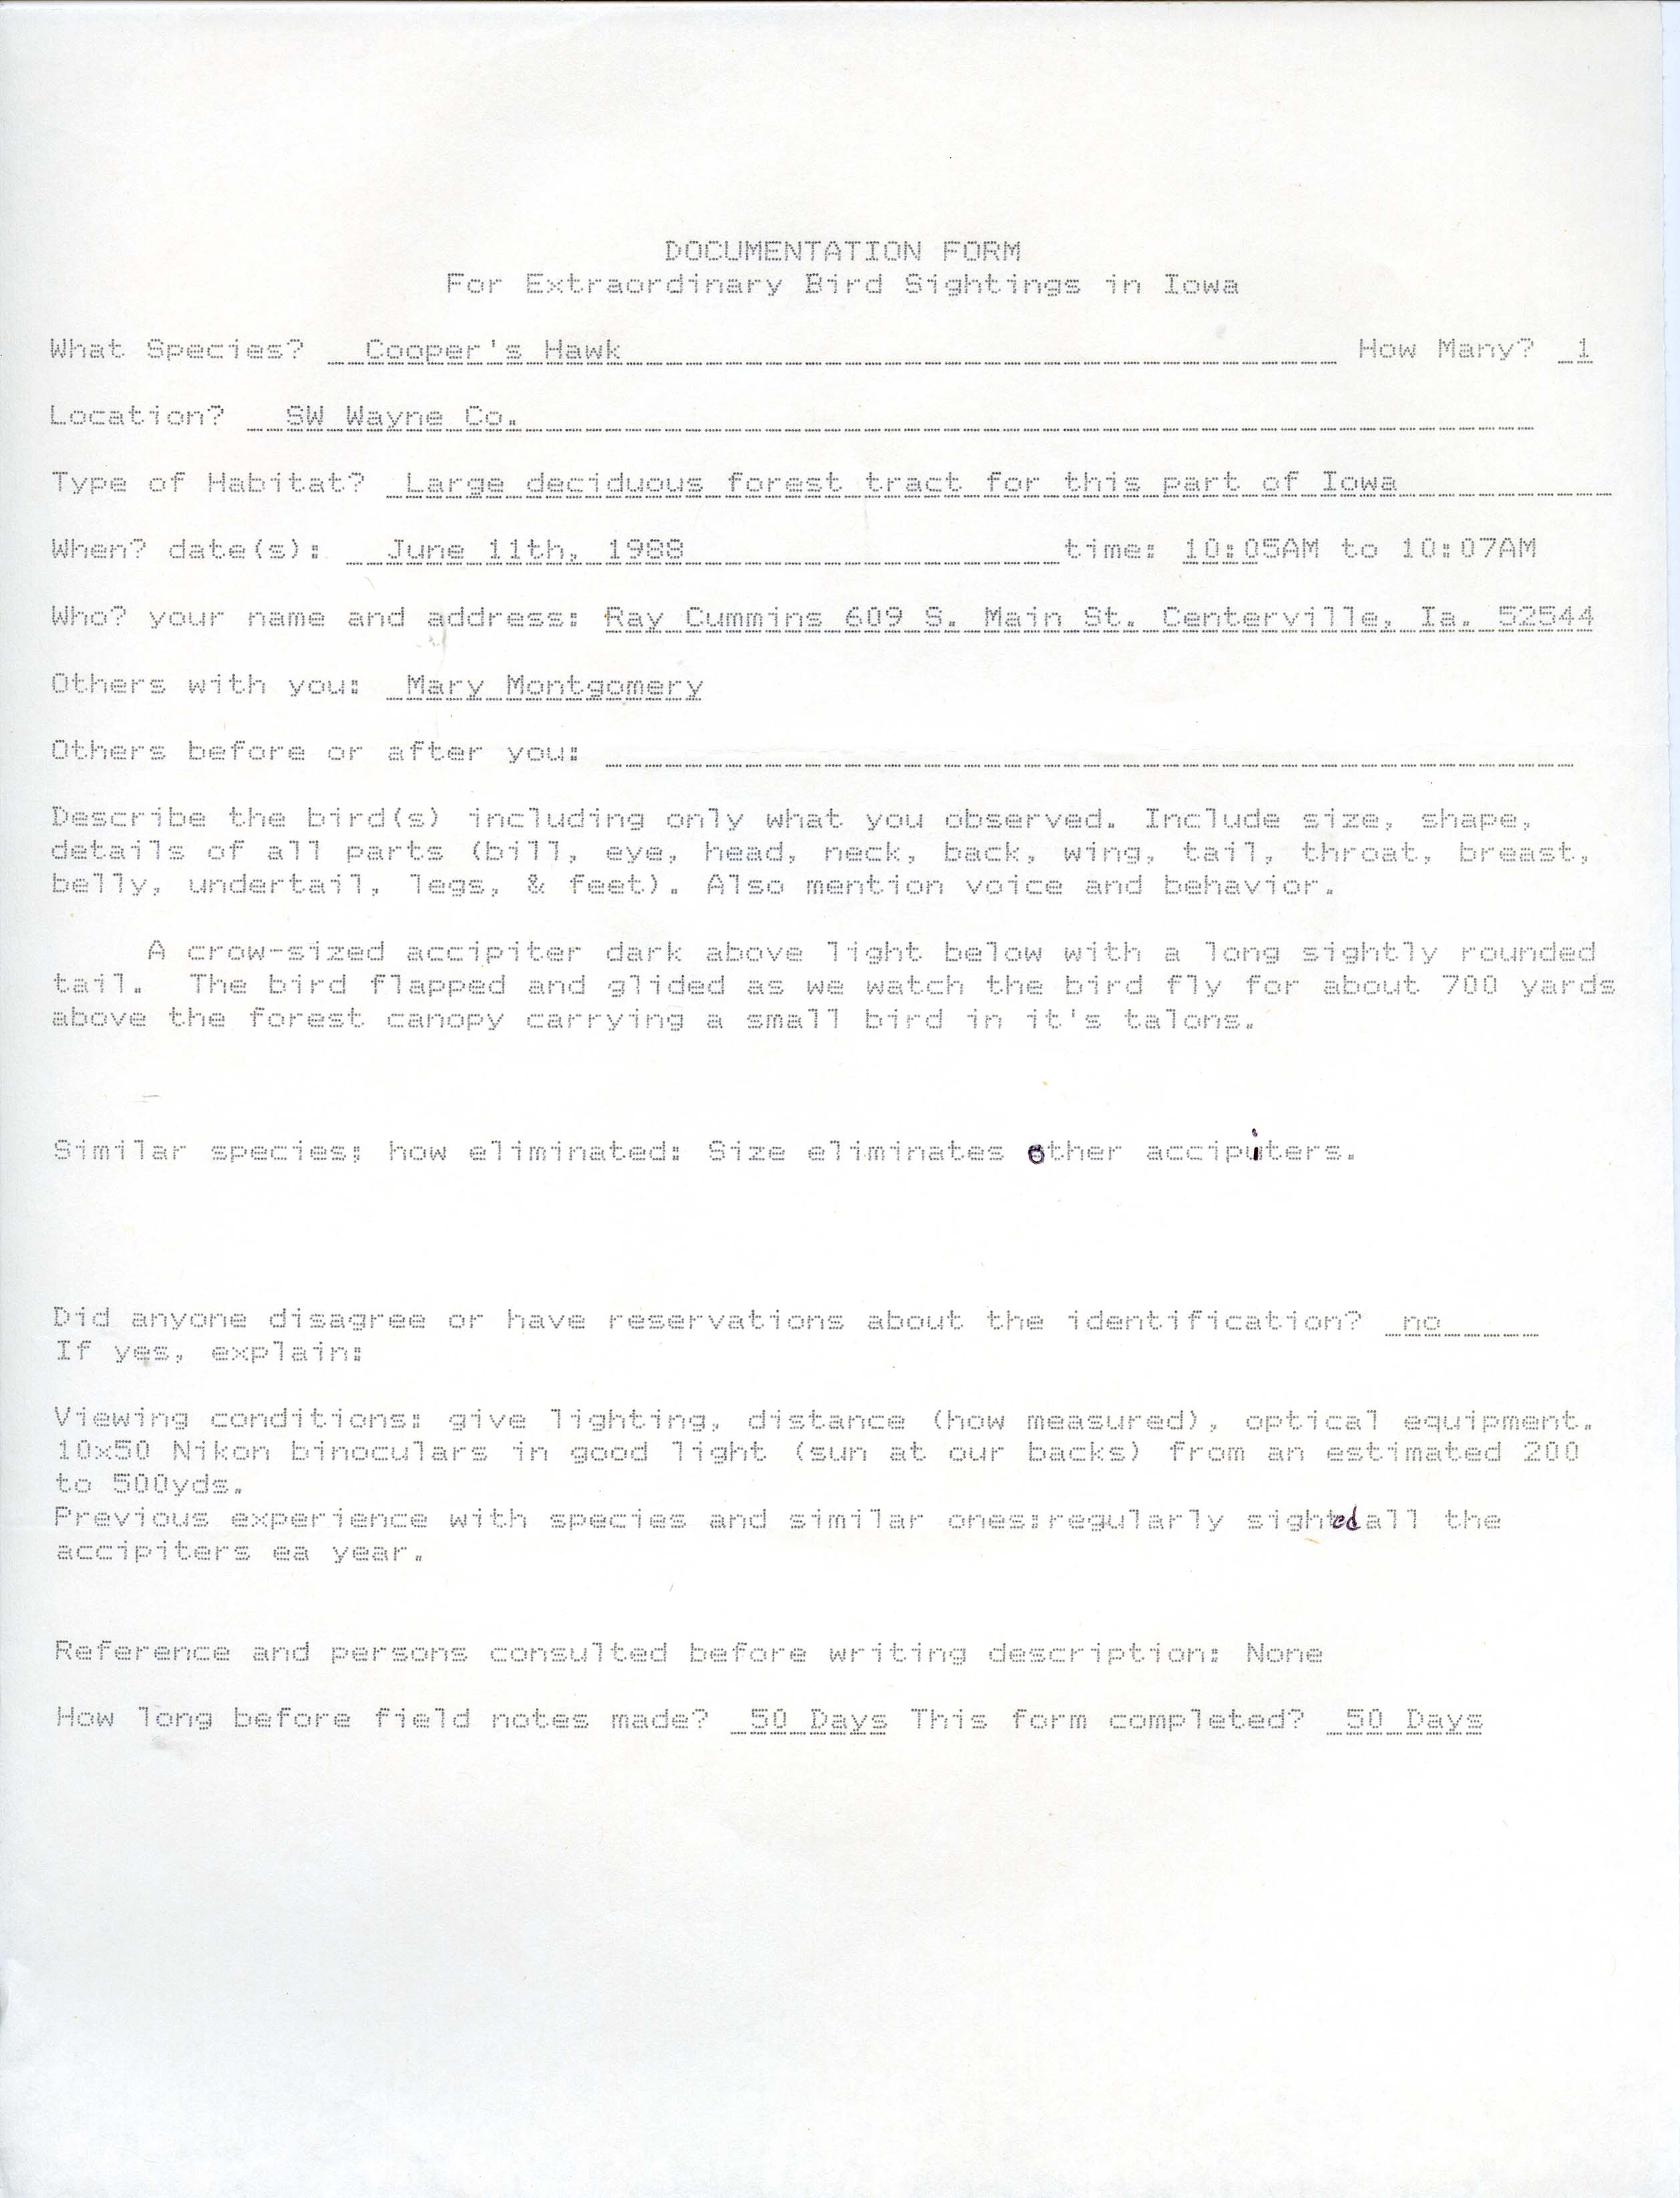 Documentation form for extraordinary bird sightings in Iowa, Cooper's Hawk, June 11, 1988